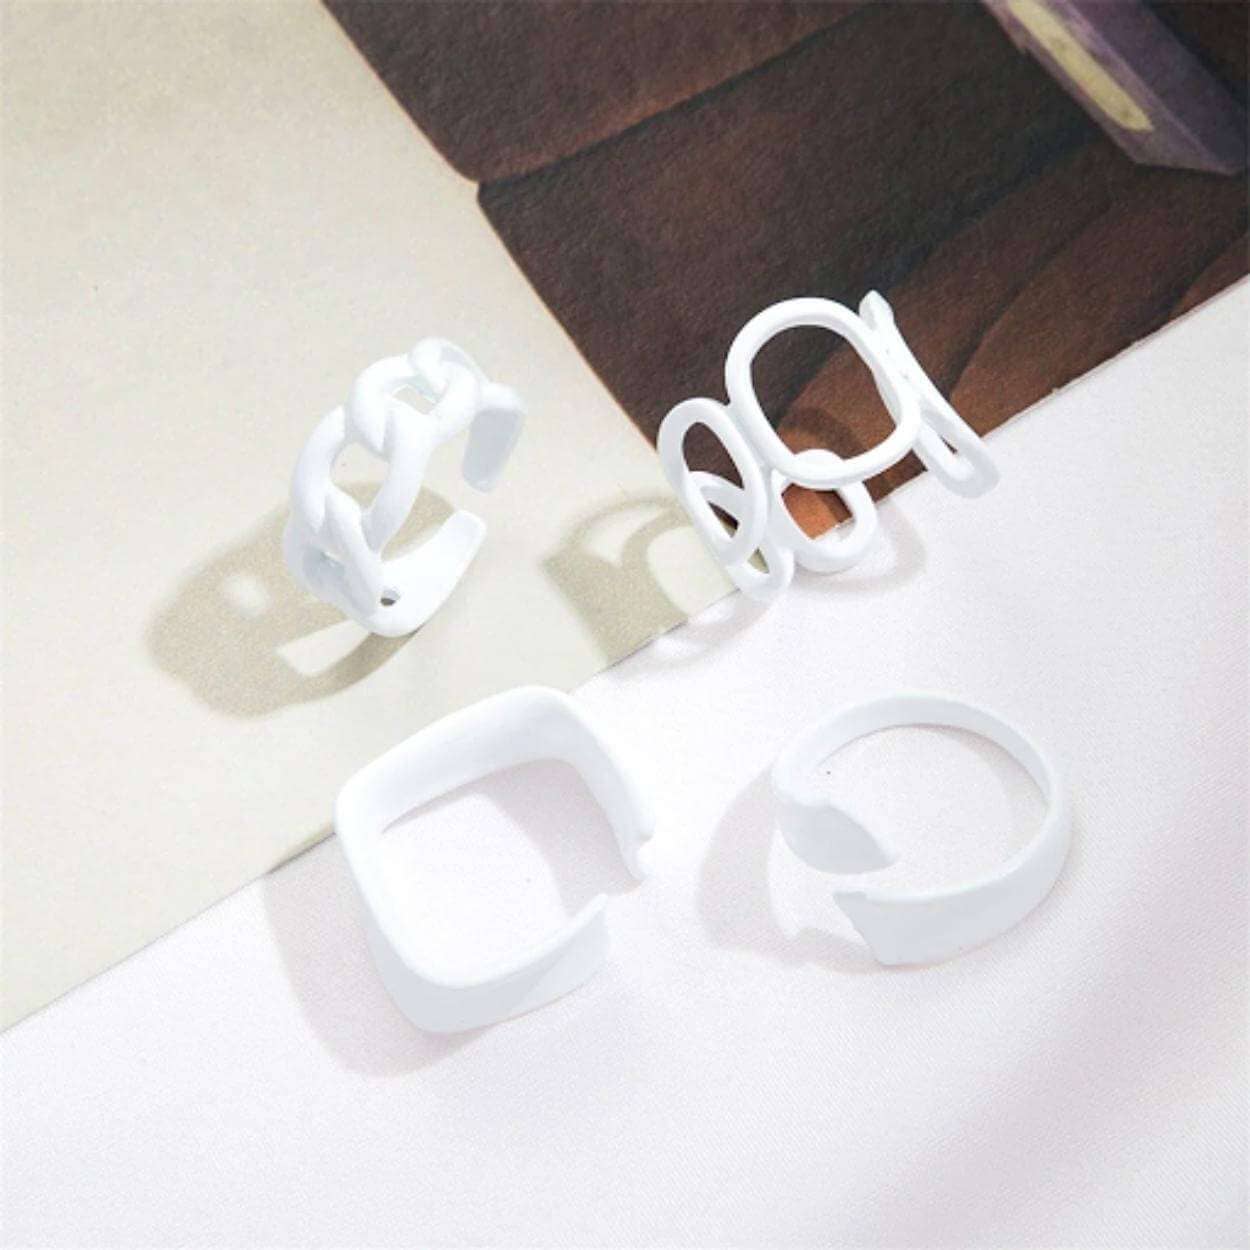 White Acrylic Rings